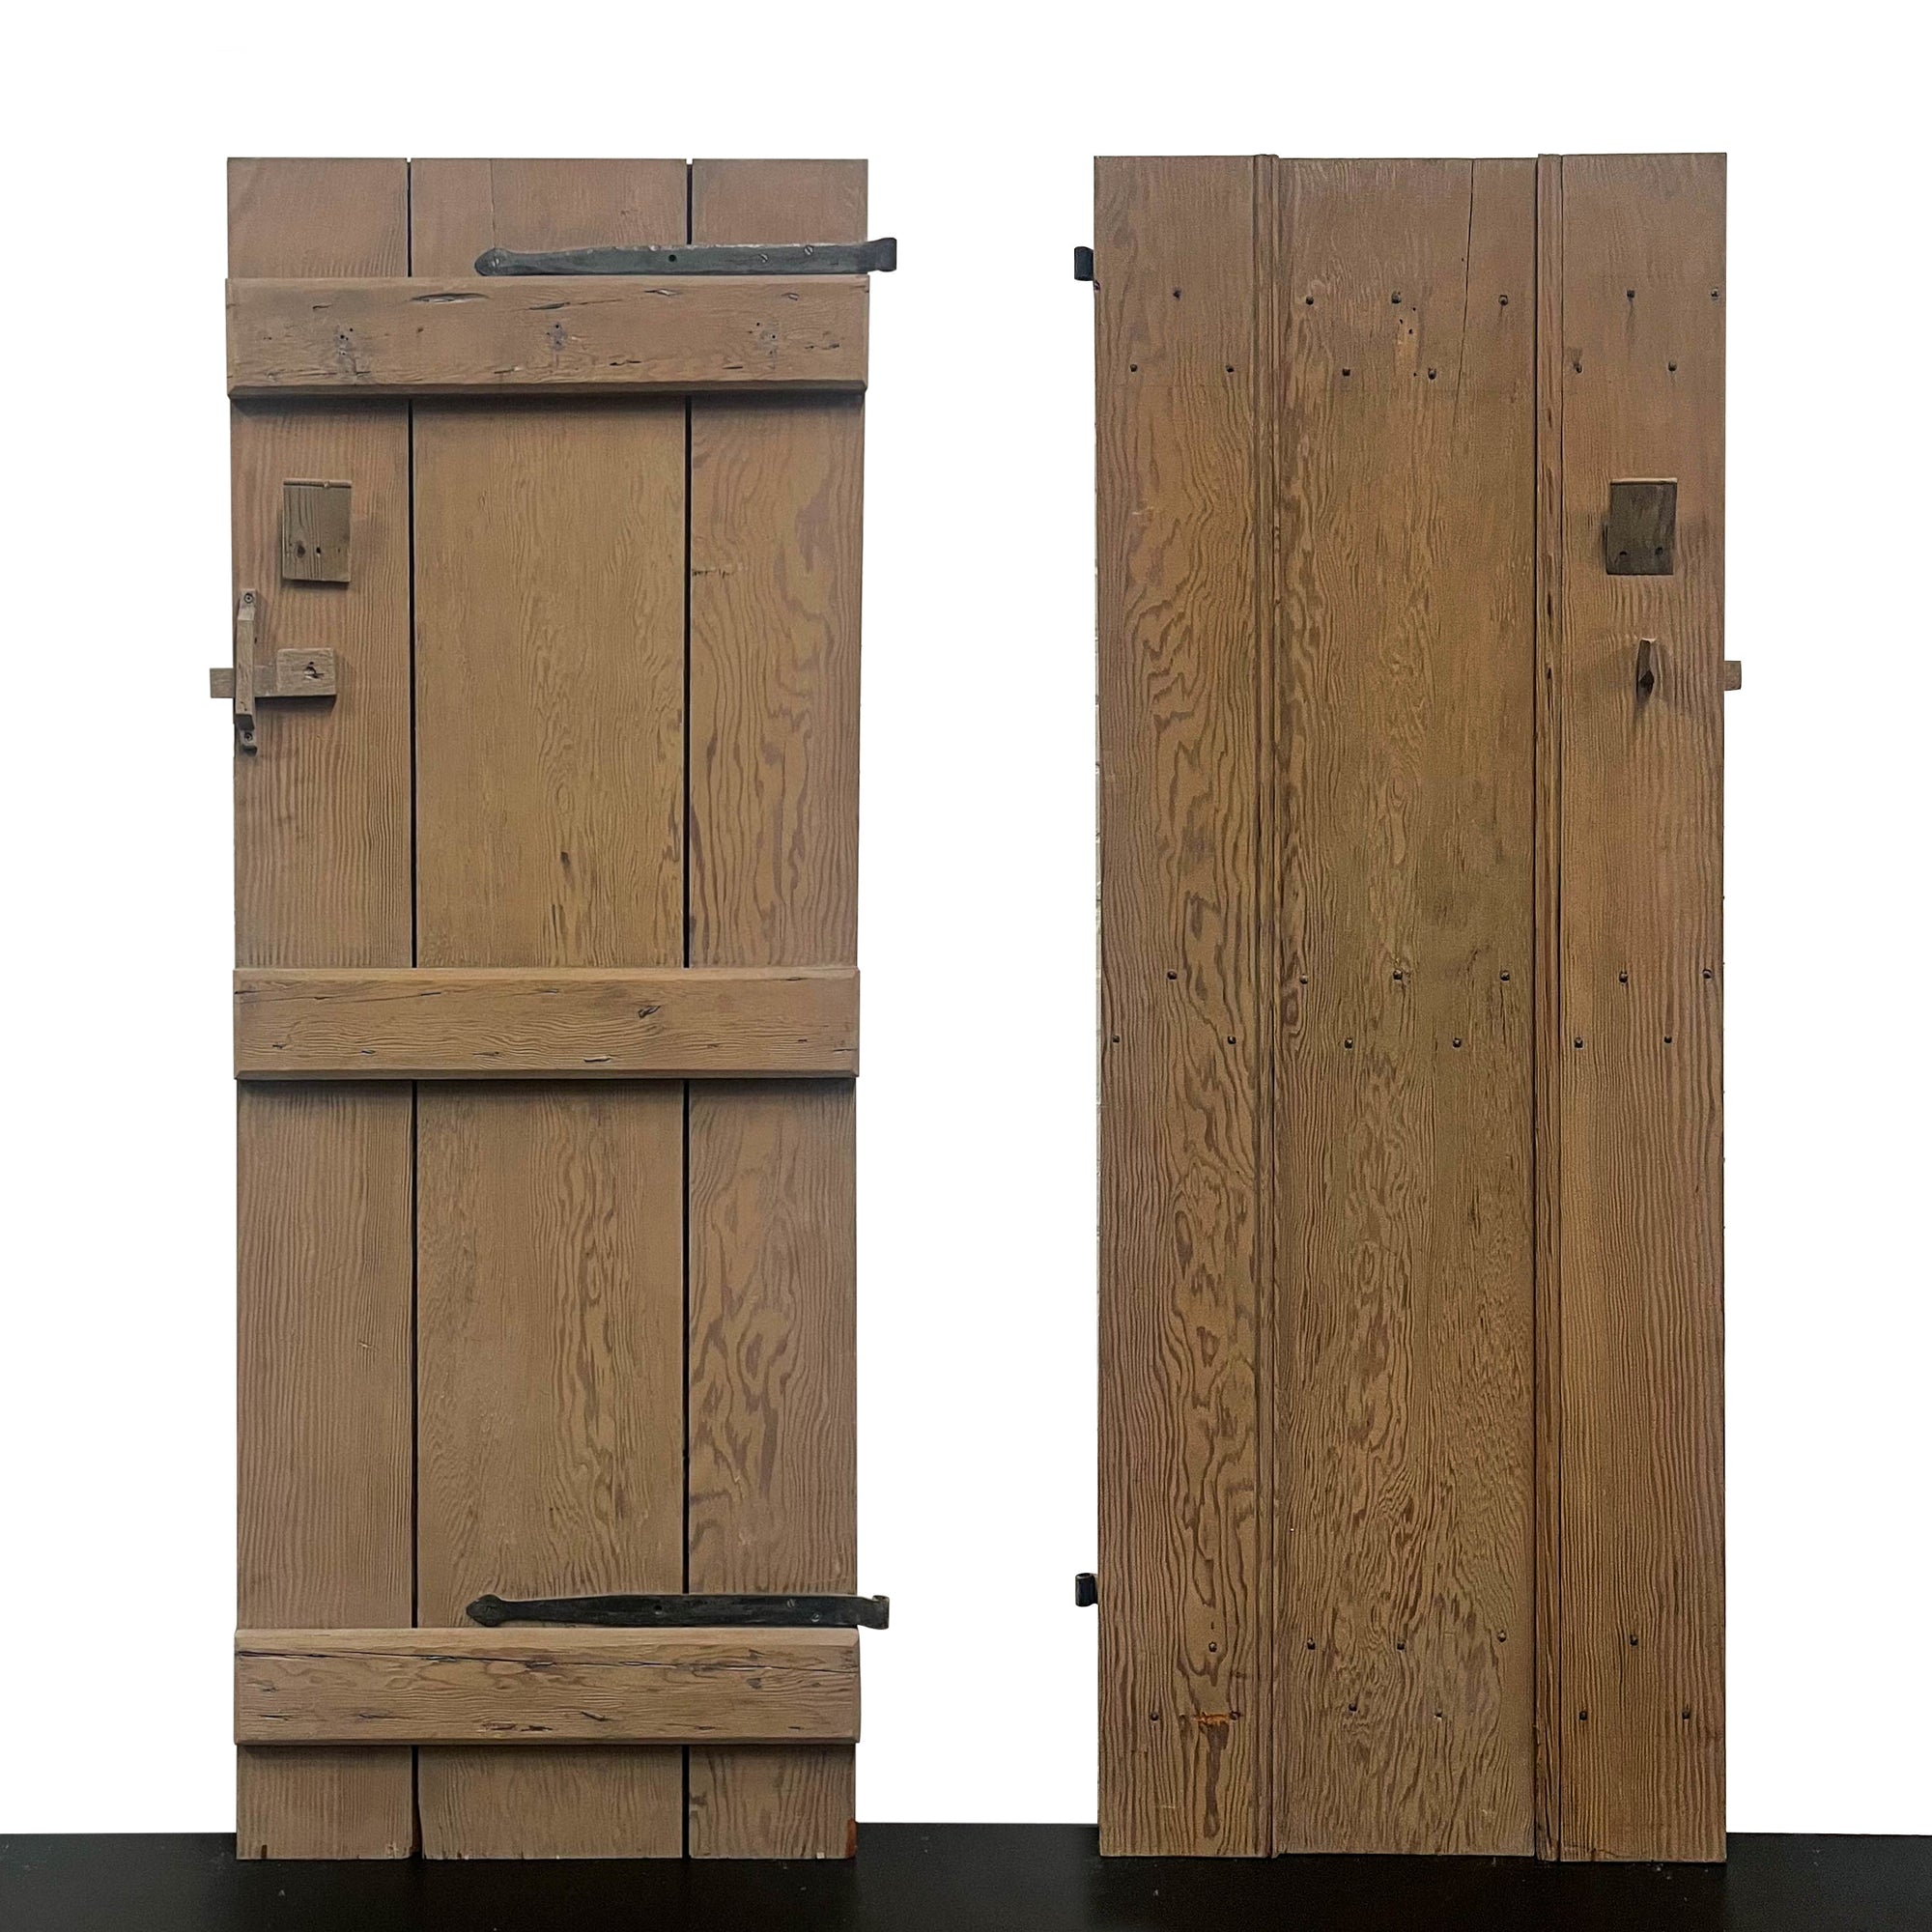 Antique Victorian Pine Latch Door - 185.5cm x 68cm | The Architectural Forum